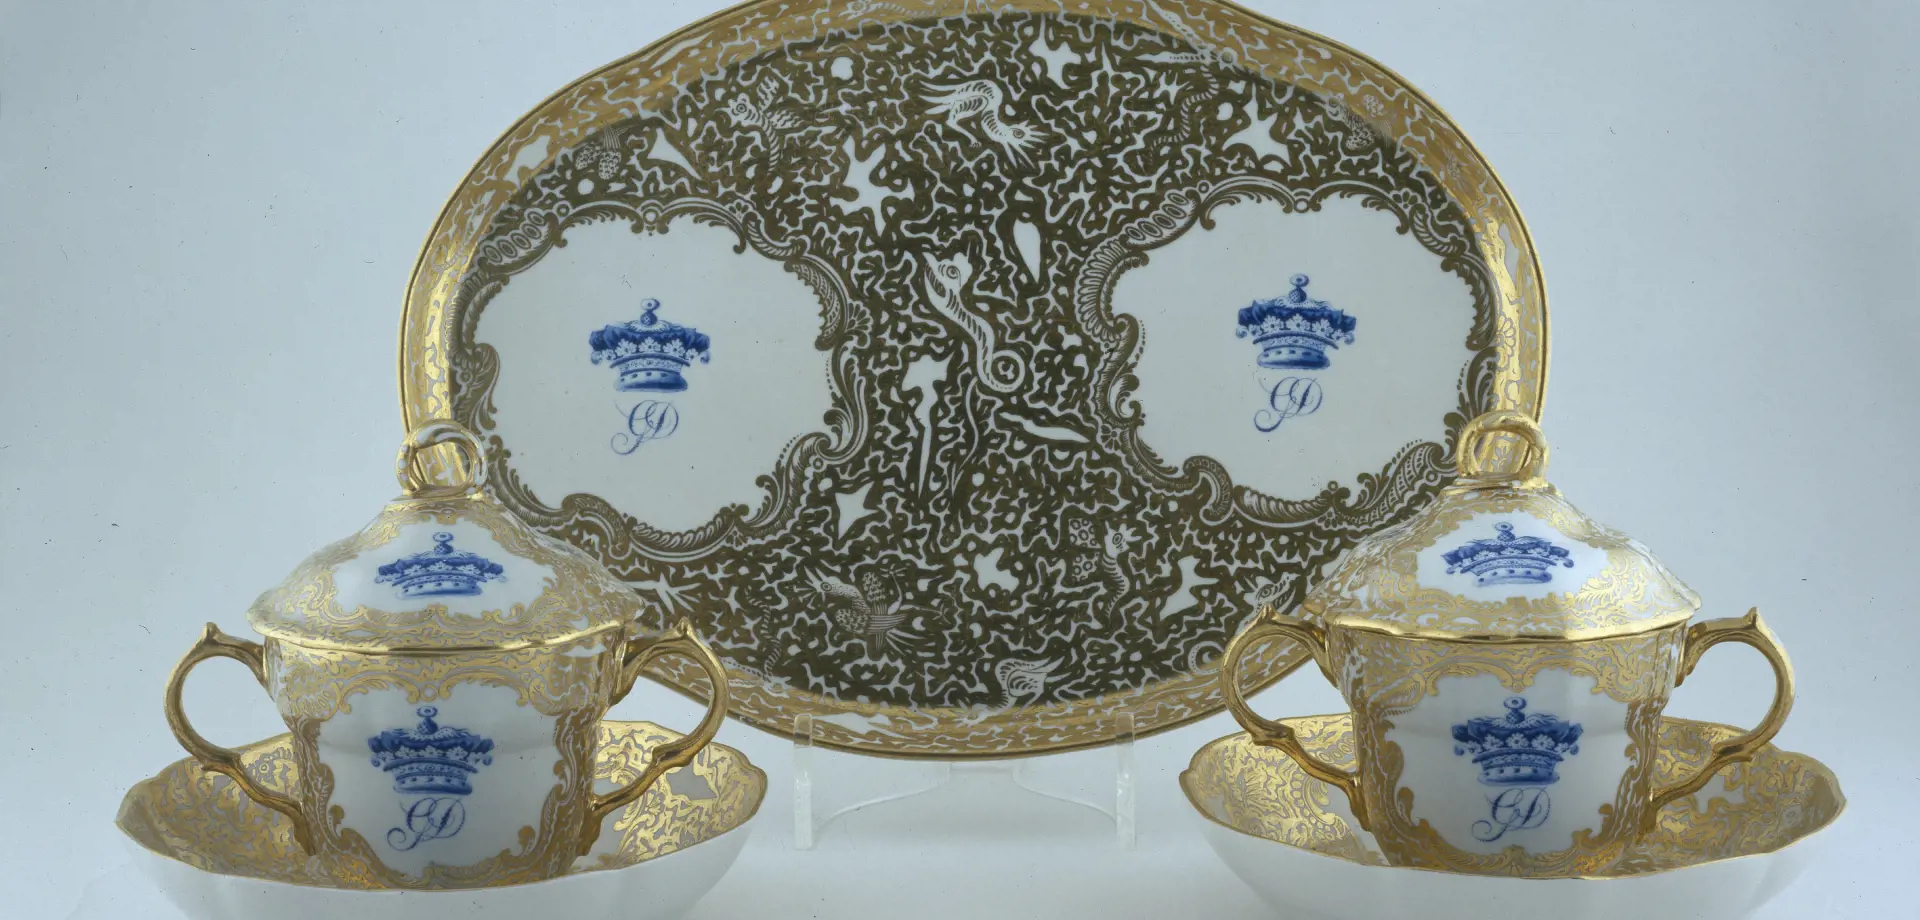 Porcelain white and gold tea set